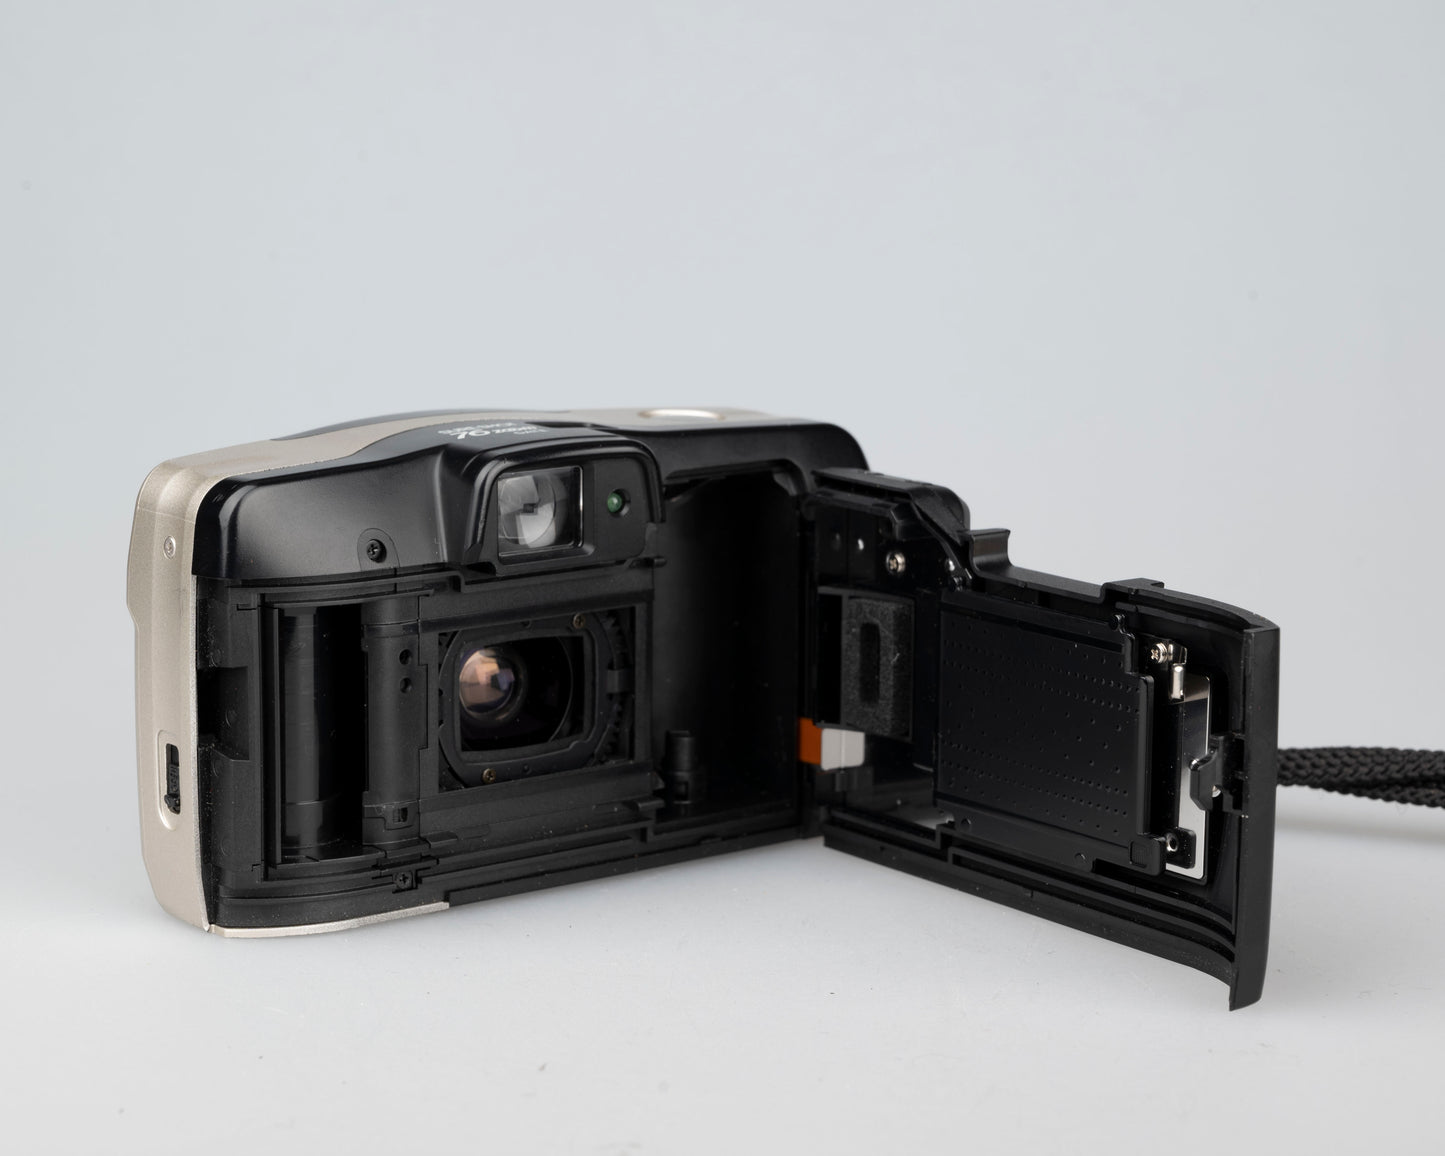 Canon Sure Shot 76 Zoom Date 35mm film camera w/ case (serial 4665893)